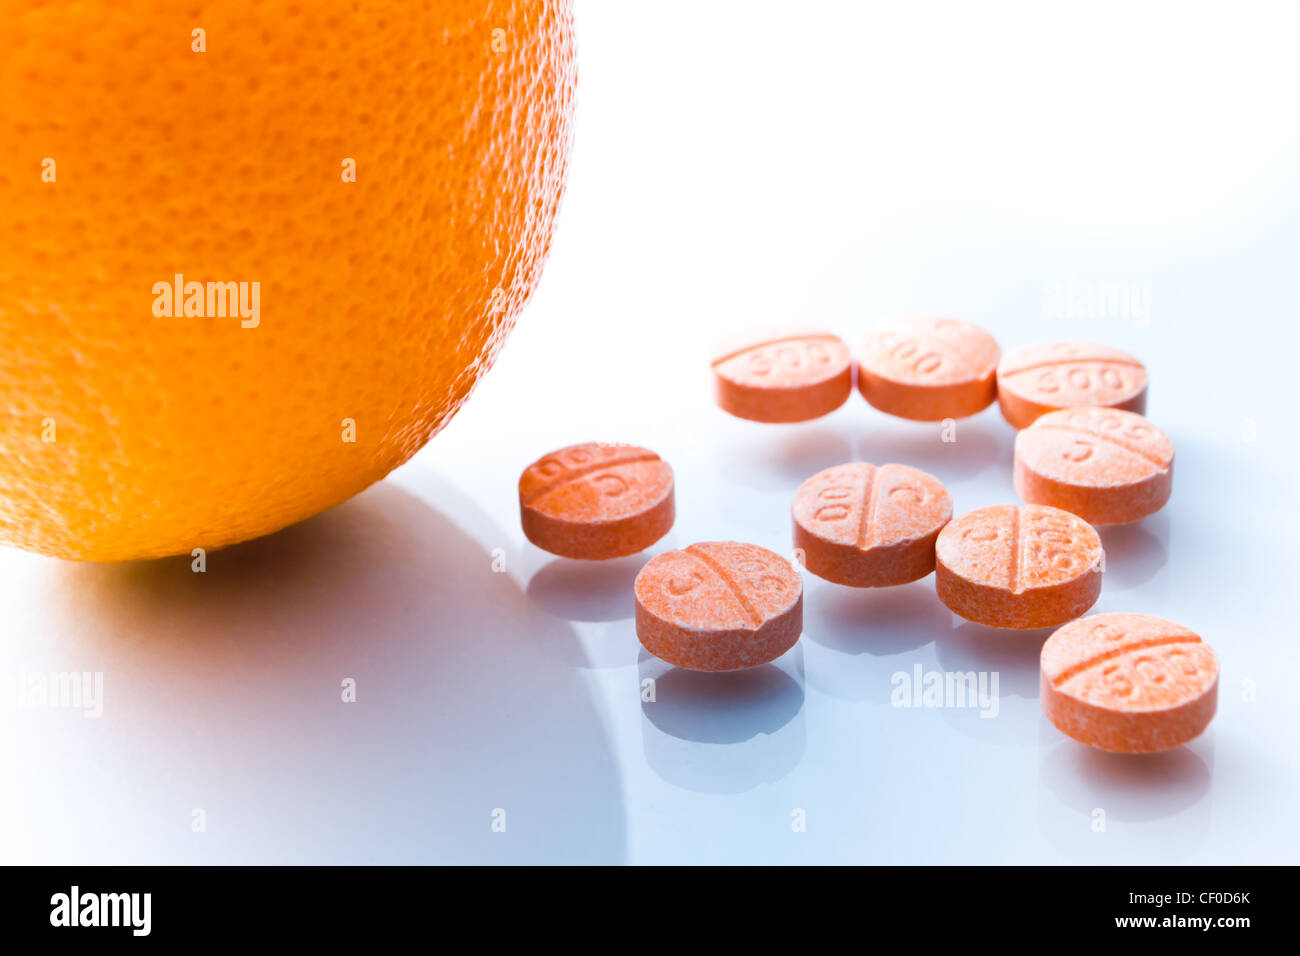 Concept image vitamin C on pills and orange fruit Stock Photo